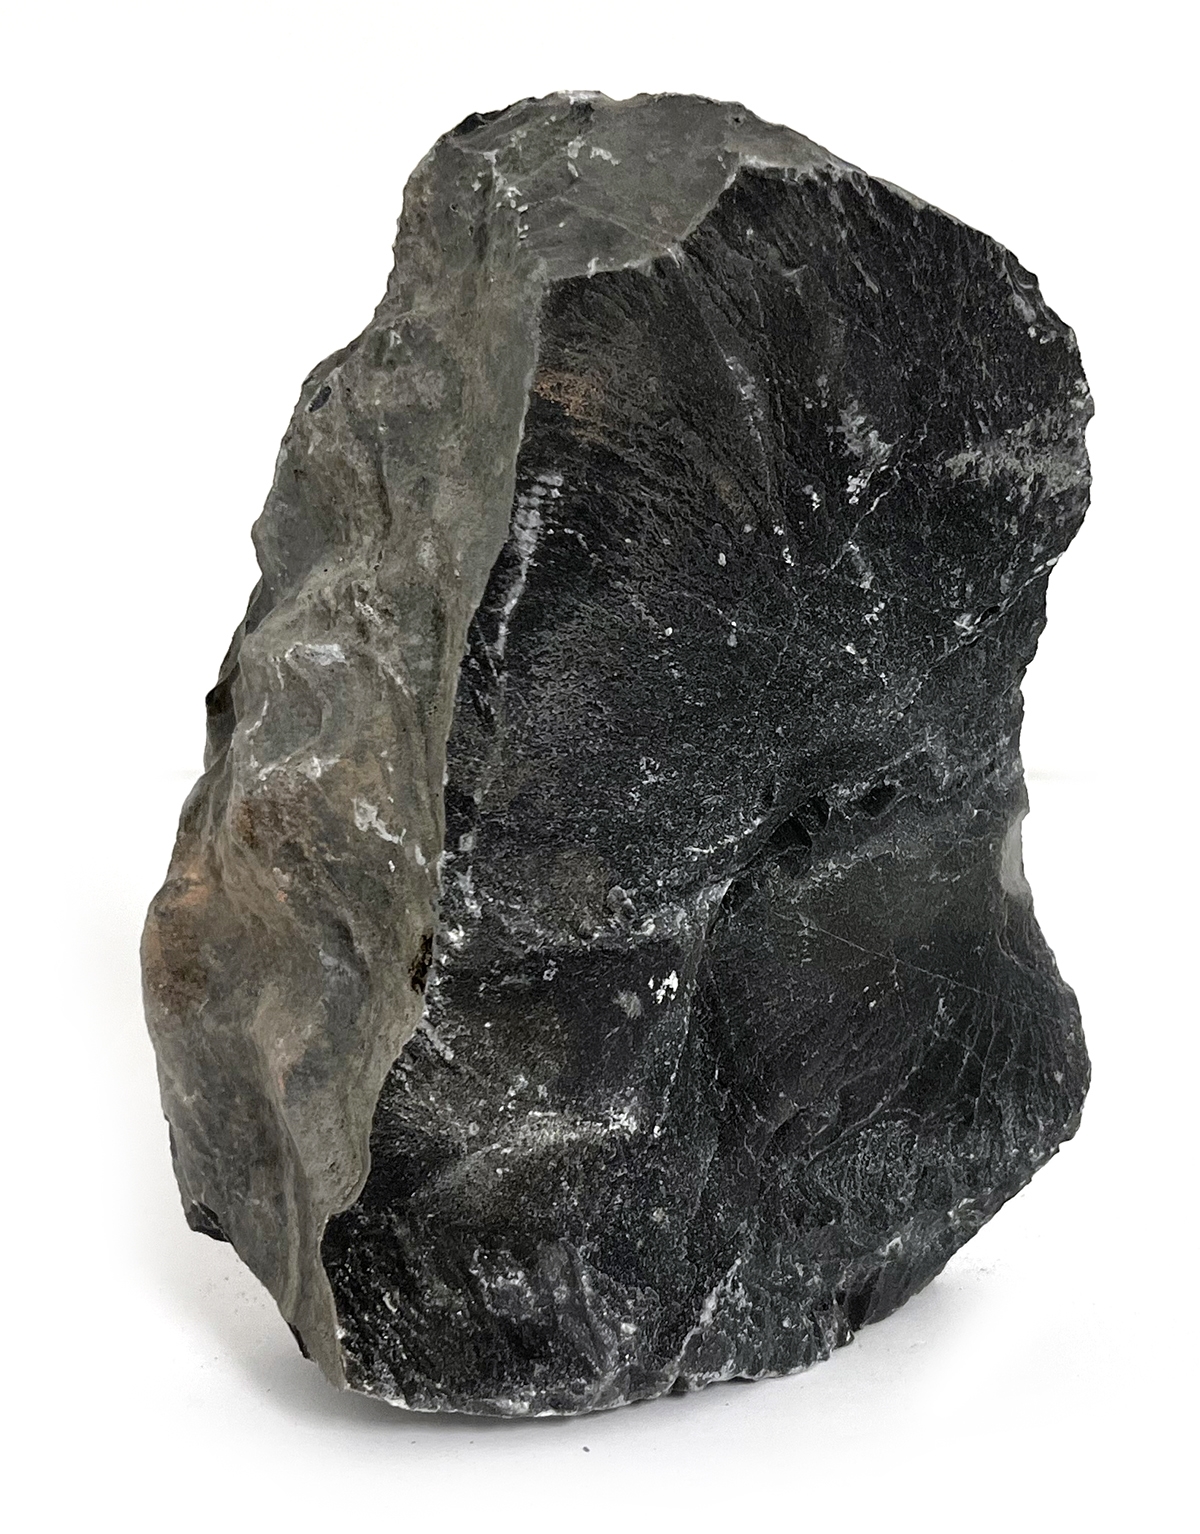 MACENAUER Kámen Messerstein M (Knife Stone, Seiryu Rock), 2,3-2,7 kg